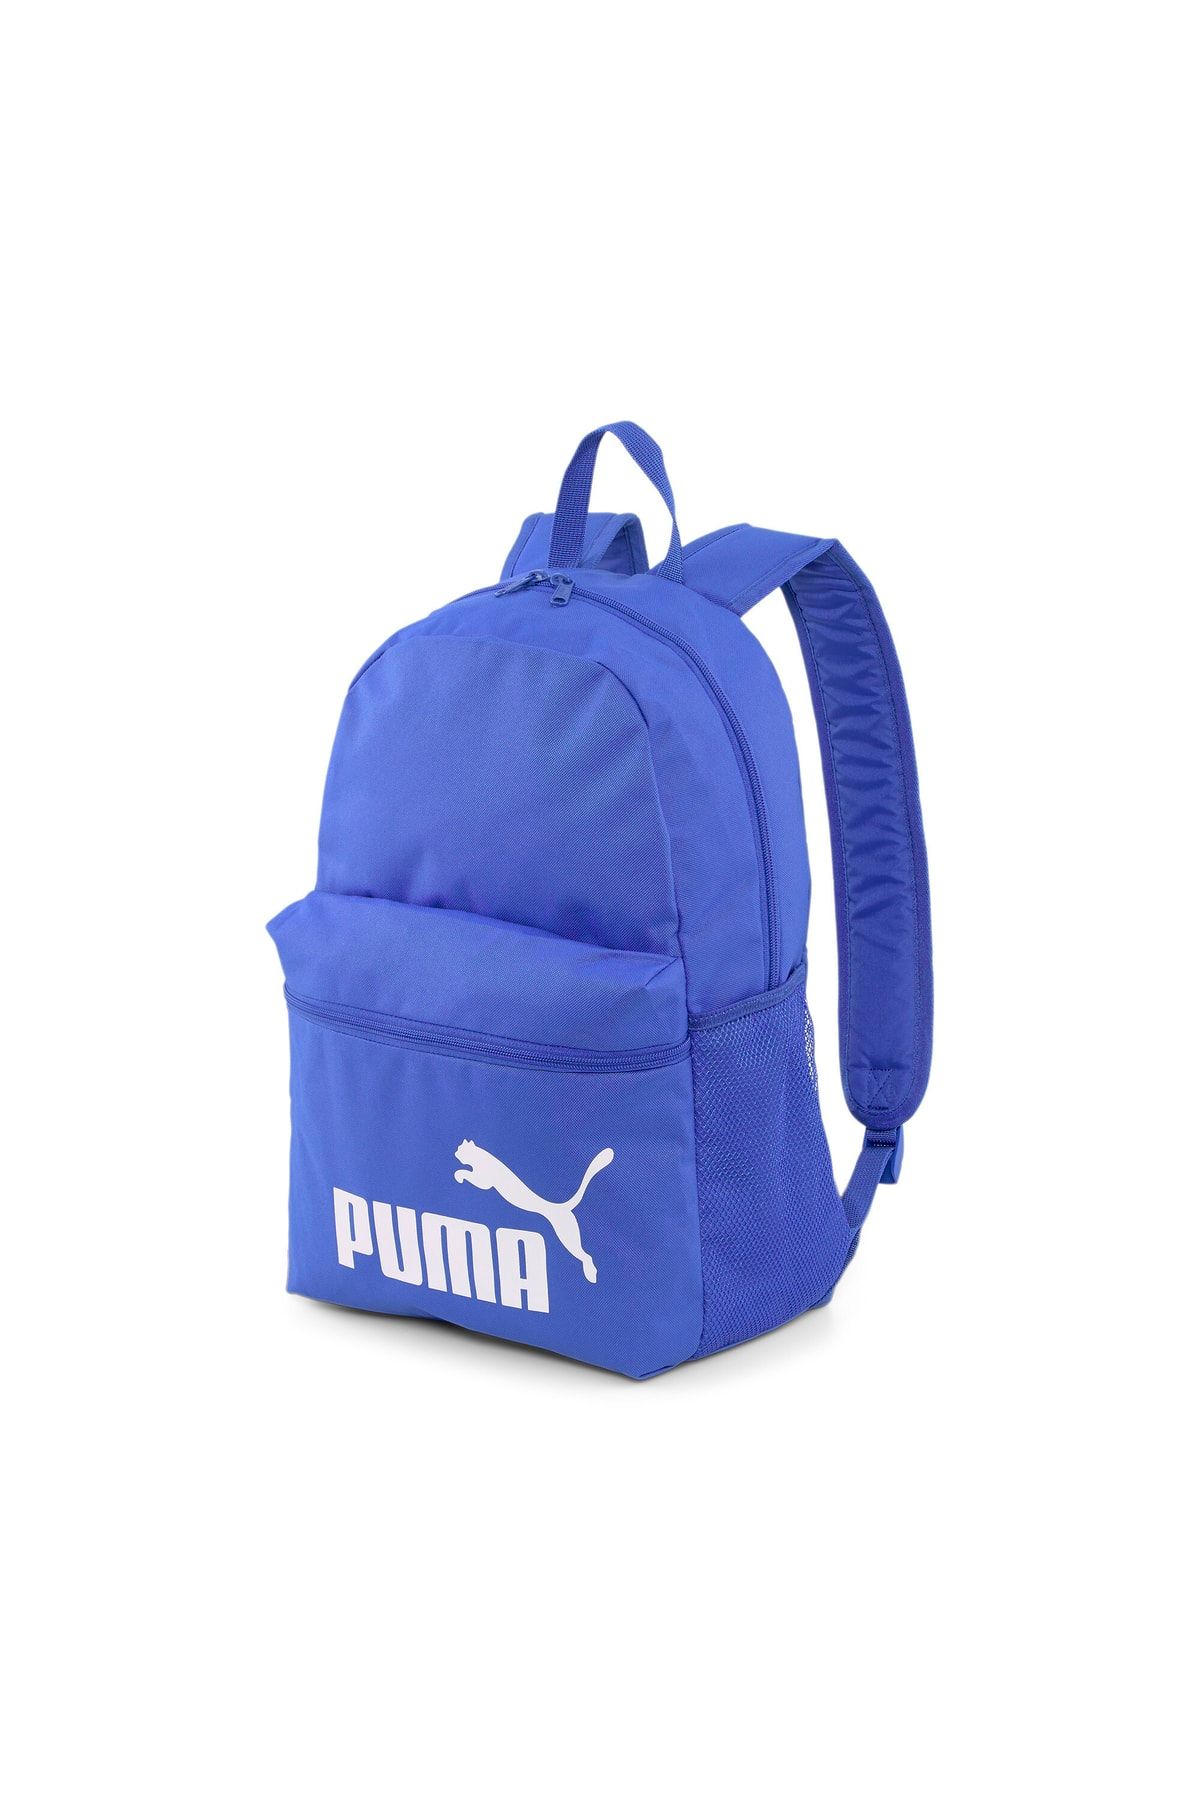 Puma Phase Backpack - Mavi Sırt Çantası